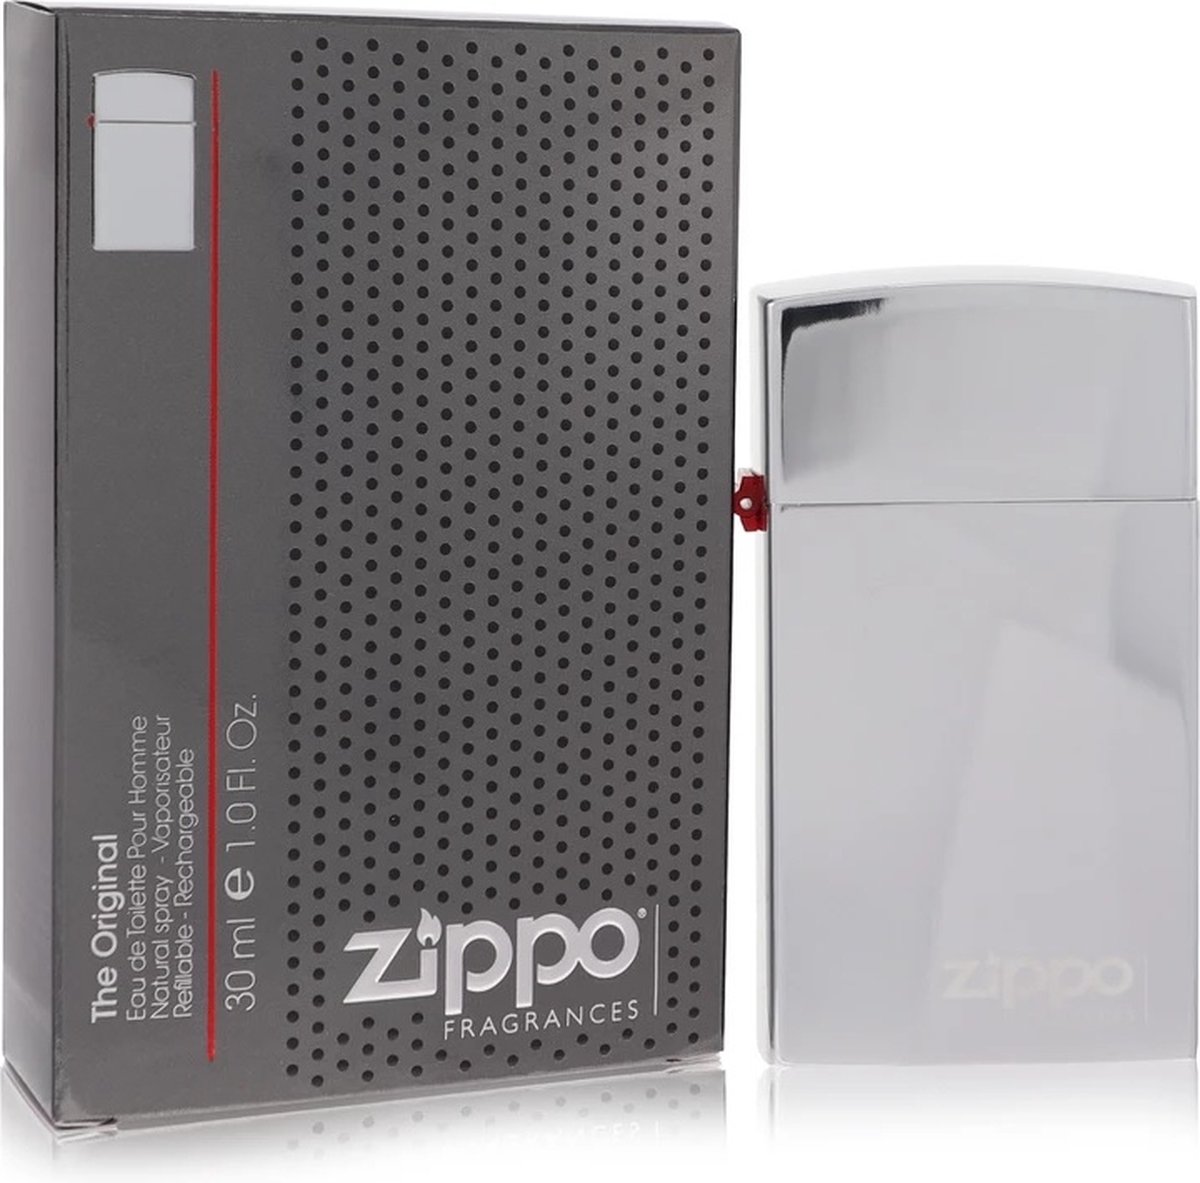 Zippo The Original parfum - Eau de toilette spray navulbaar - 30 ml